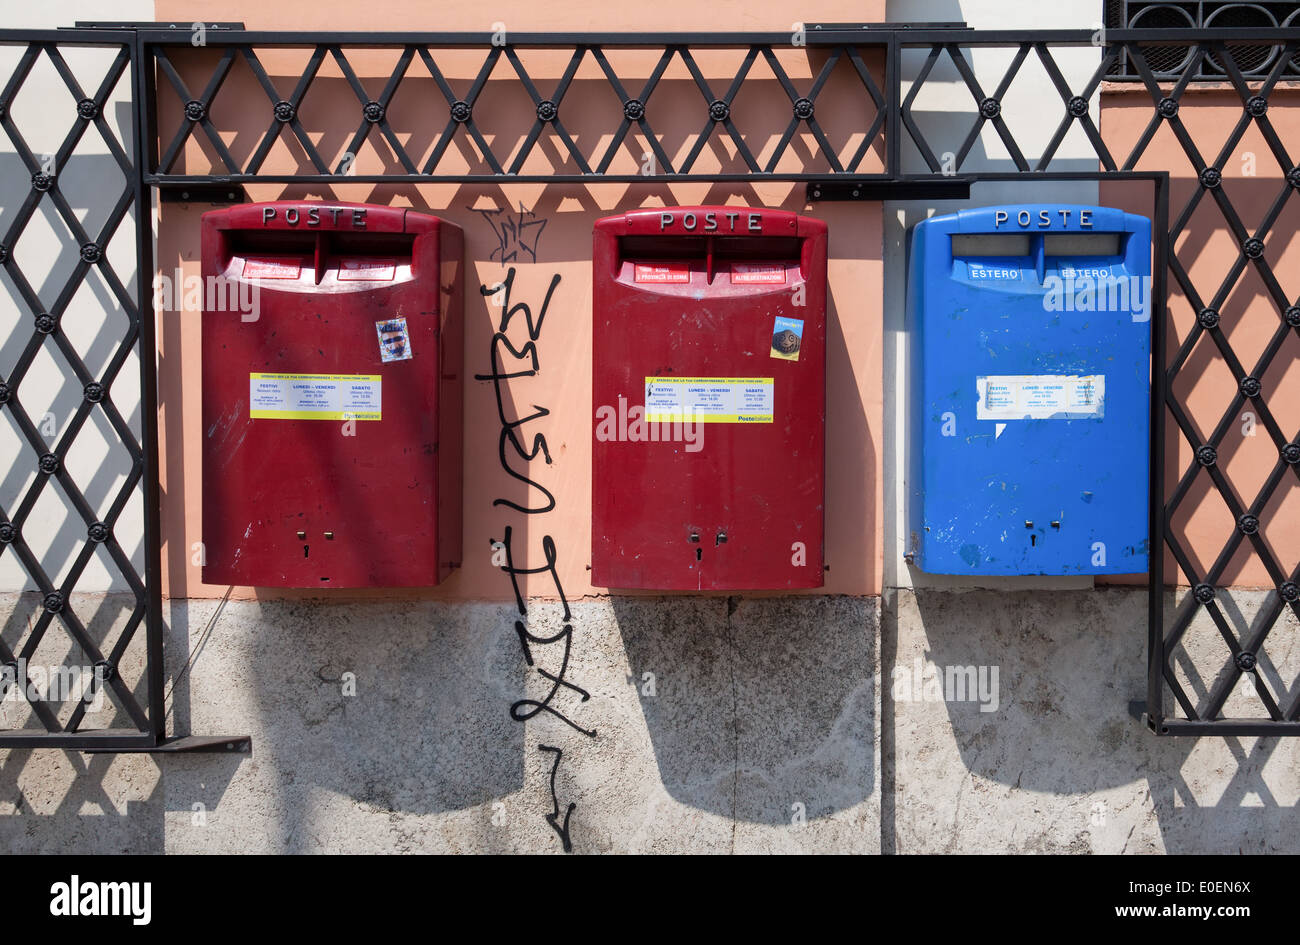 Postkästen, Rom, Italie - Boîtes aux lettres, Rome, Italie Banque D'Images